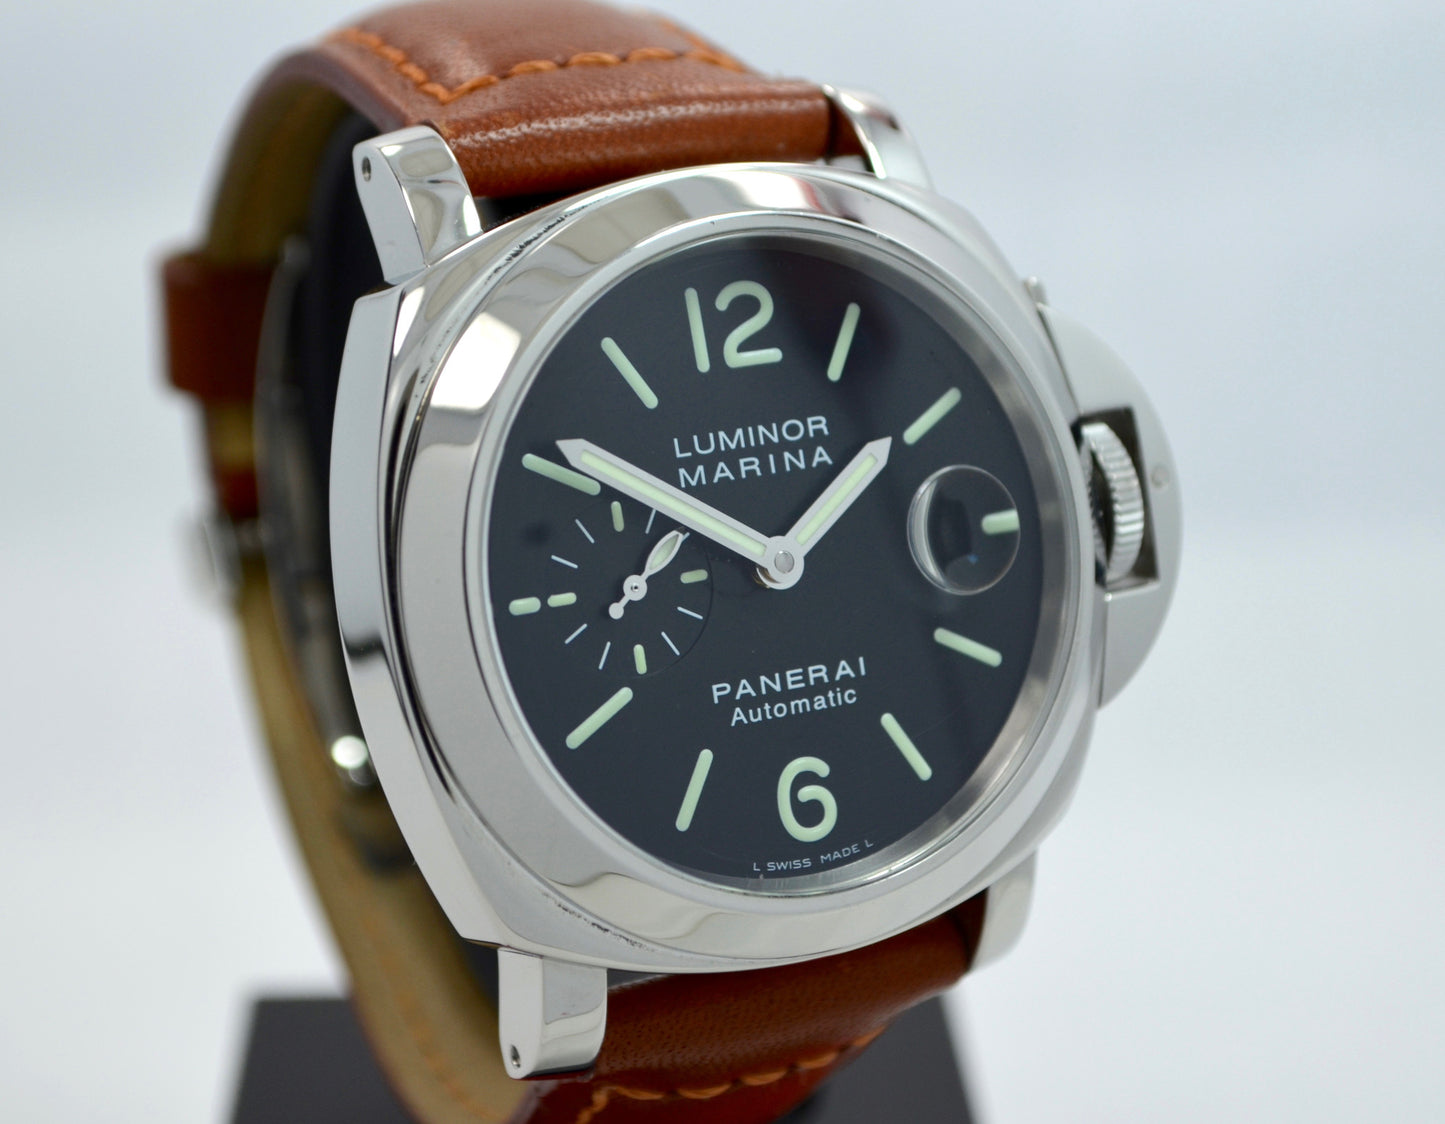 Panerai Luminor Marina PAM 104 44mm "E" Series Steel Automatic Watch - Hashtag Watch Company